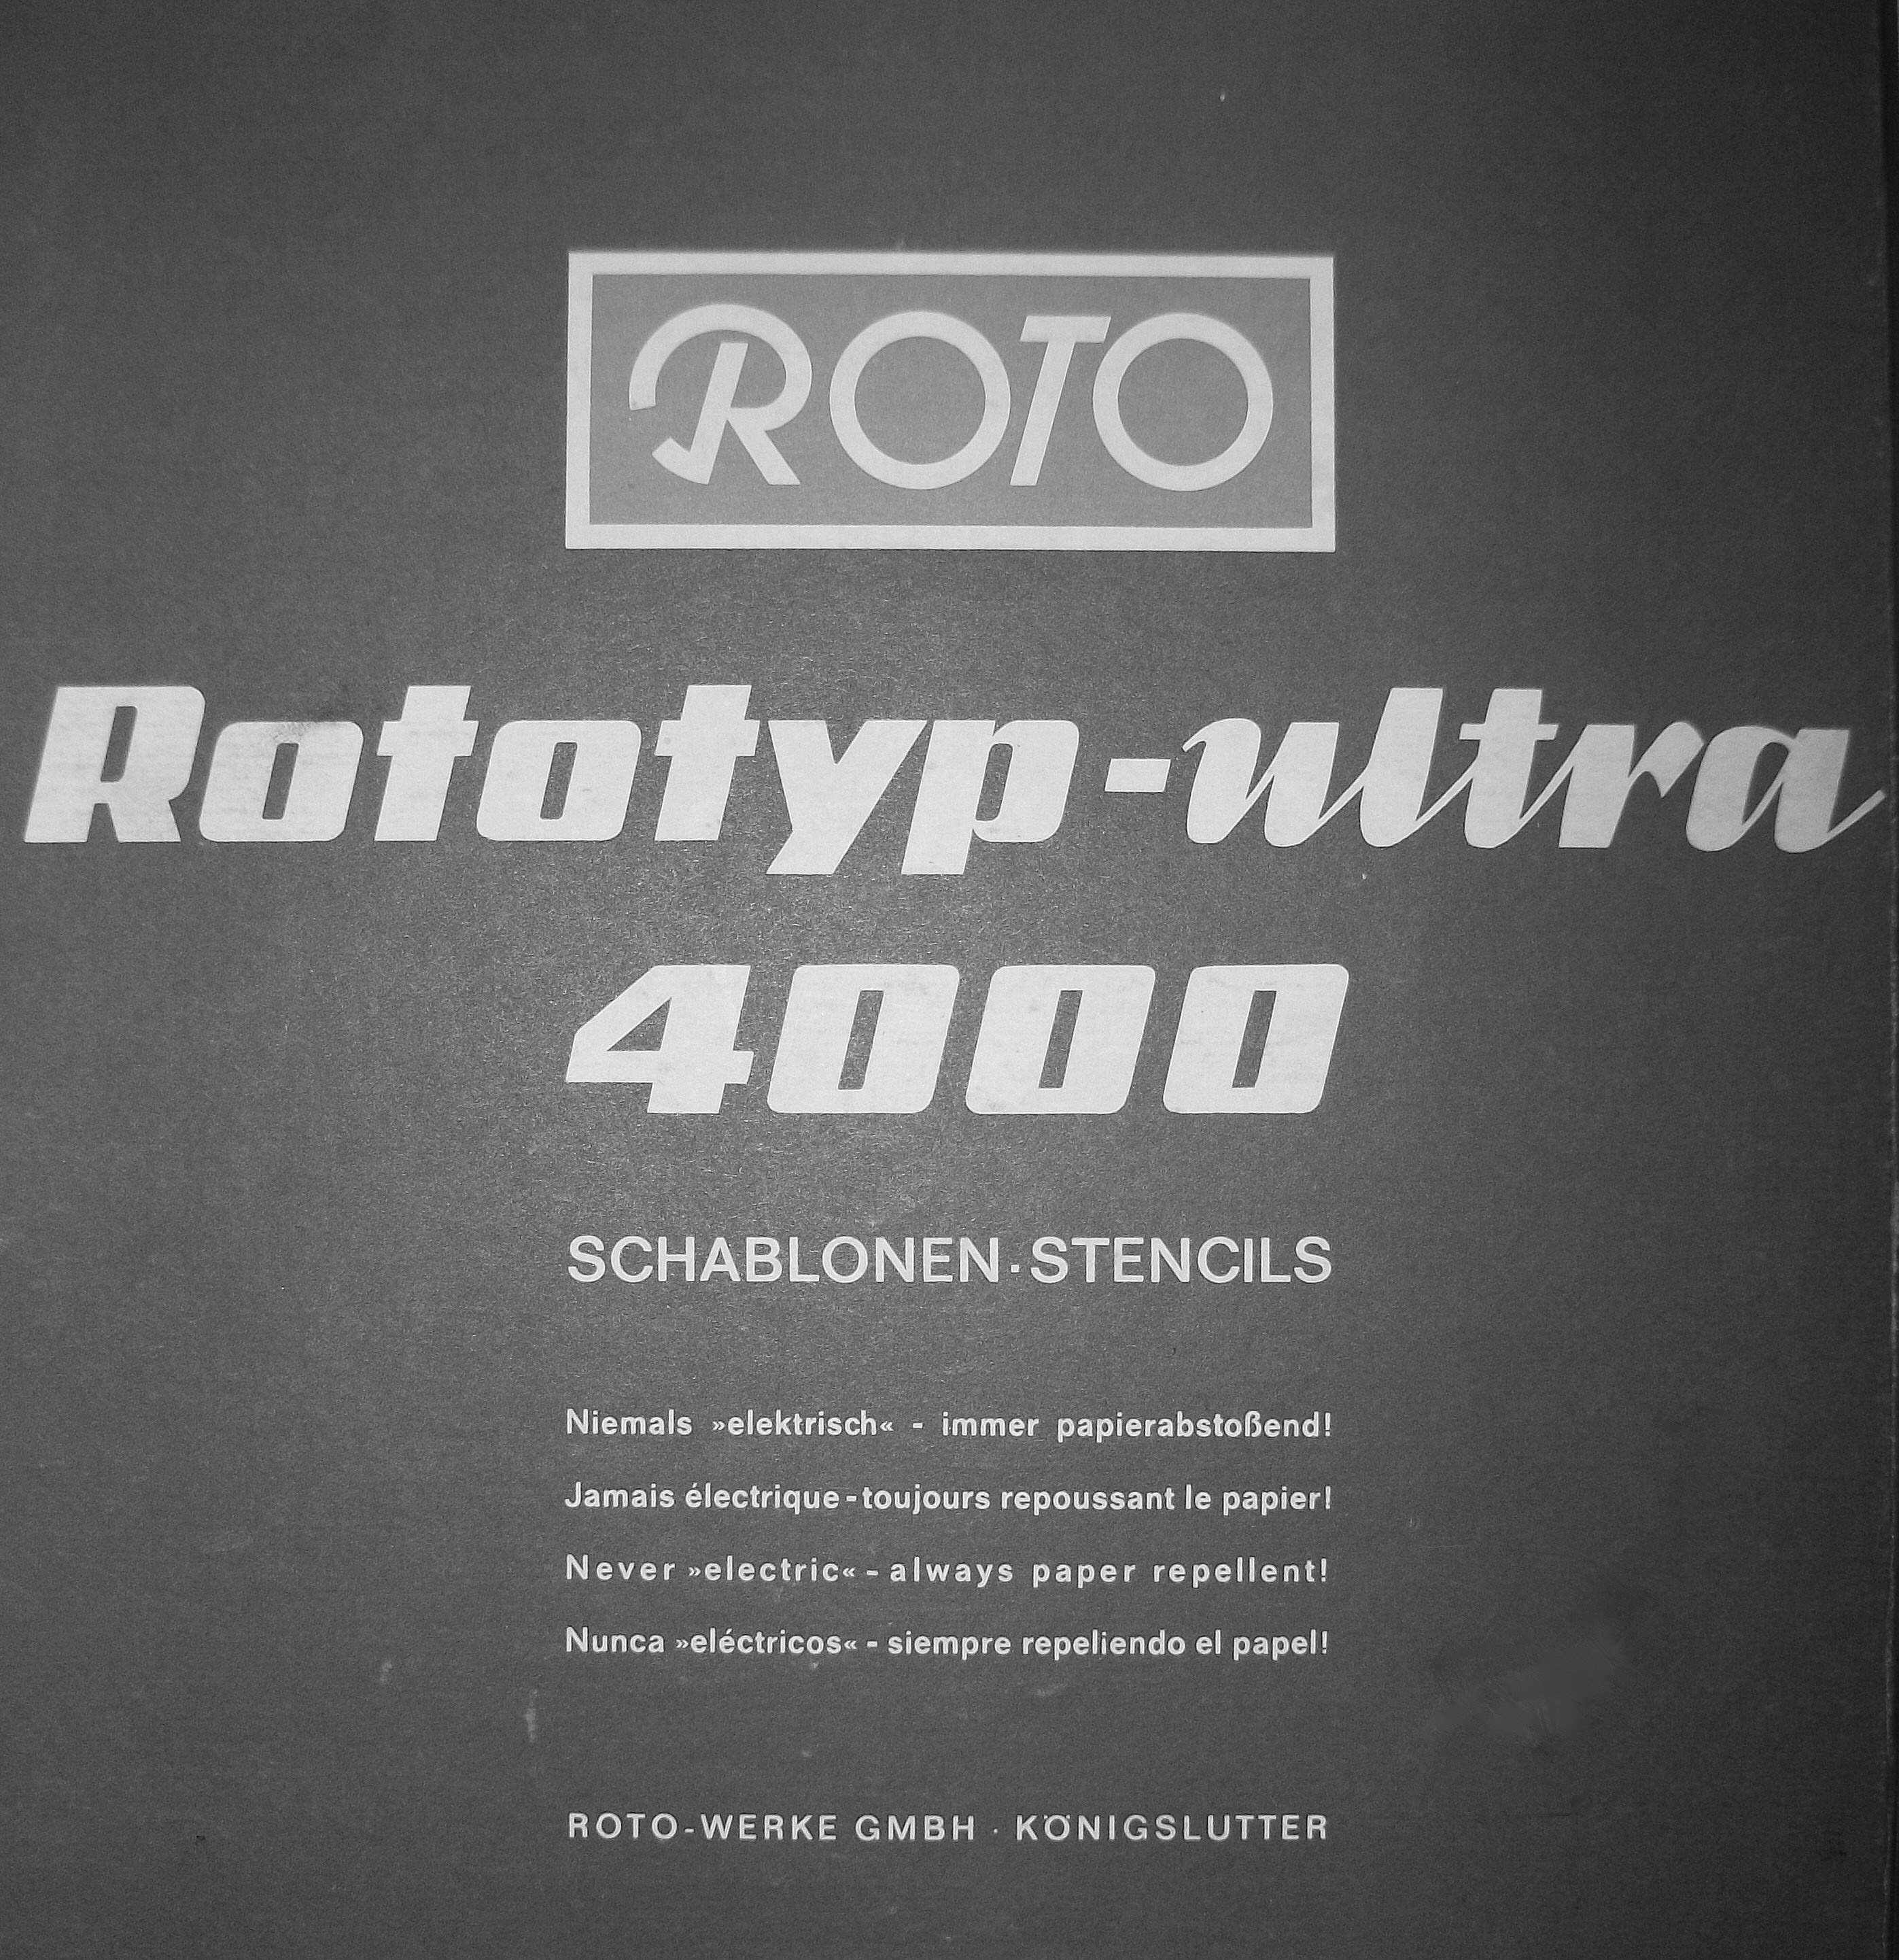 ROTO Rototyp-ultra 4000 SCHABLONEN-STENCILS, Privatbesitz